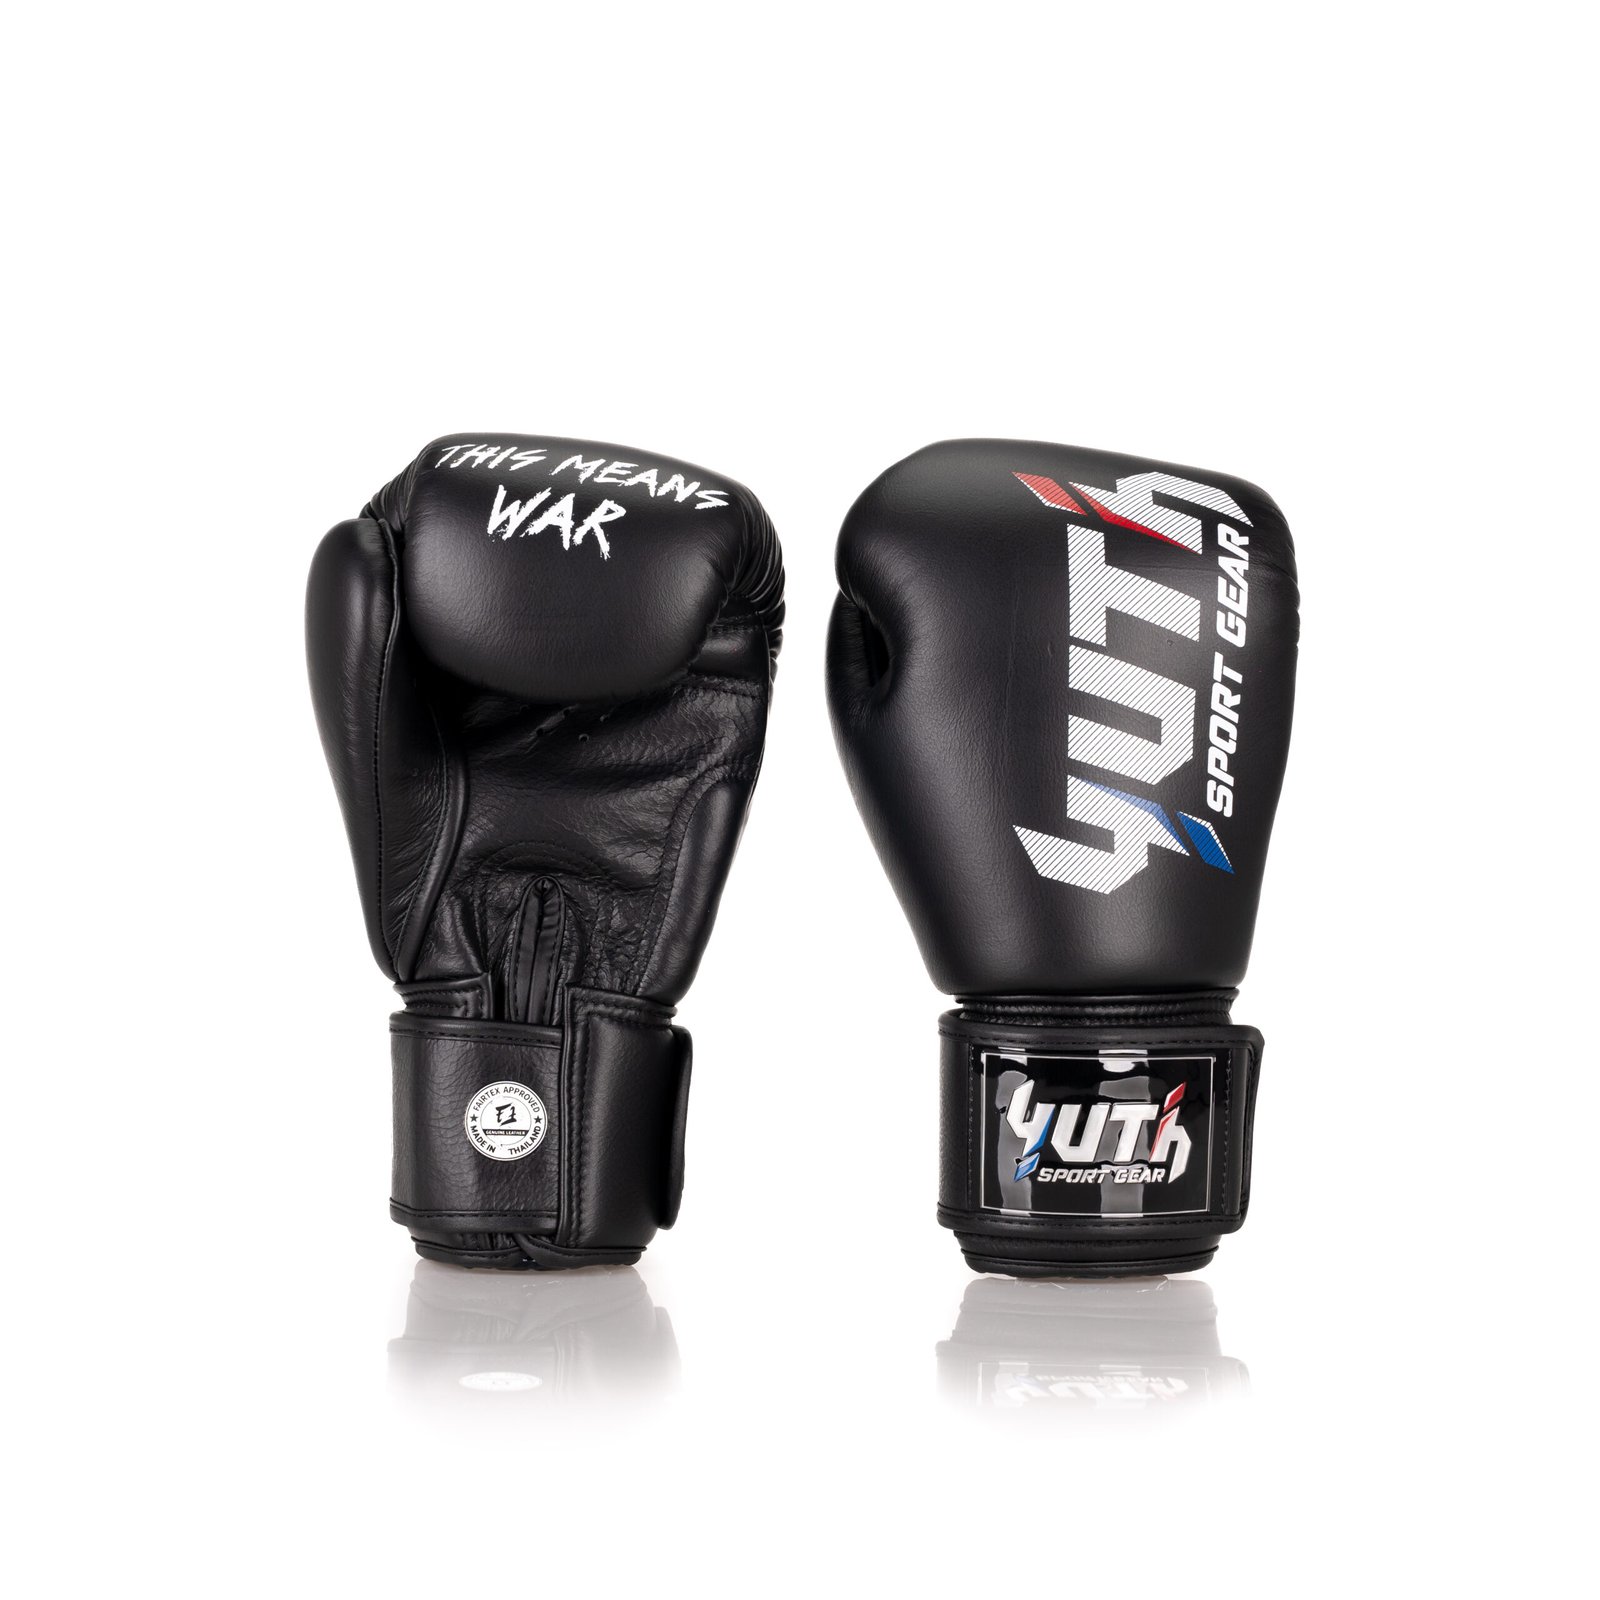 Yuth Sport Line Black Boxing Gloves